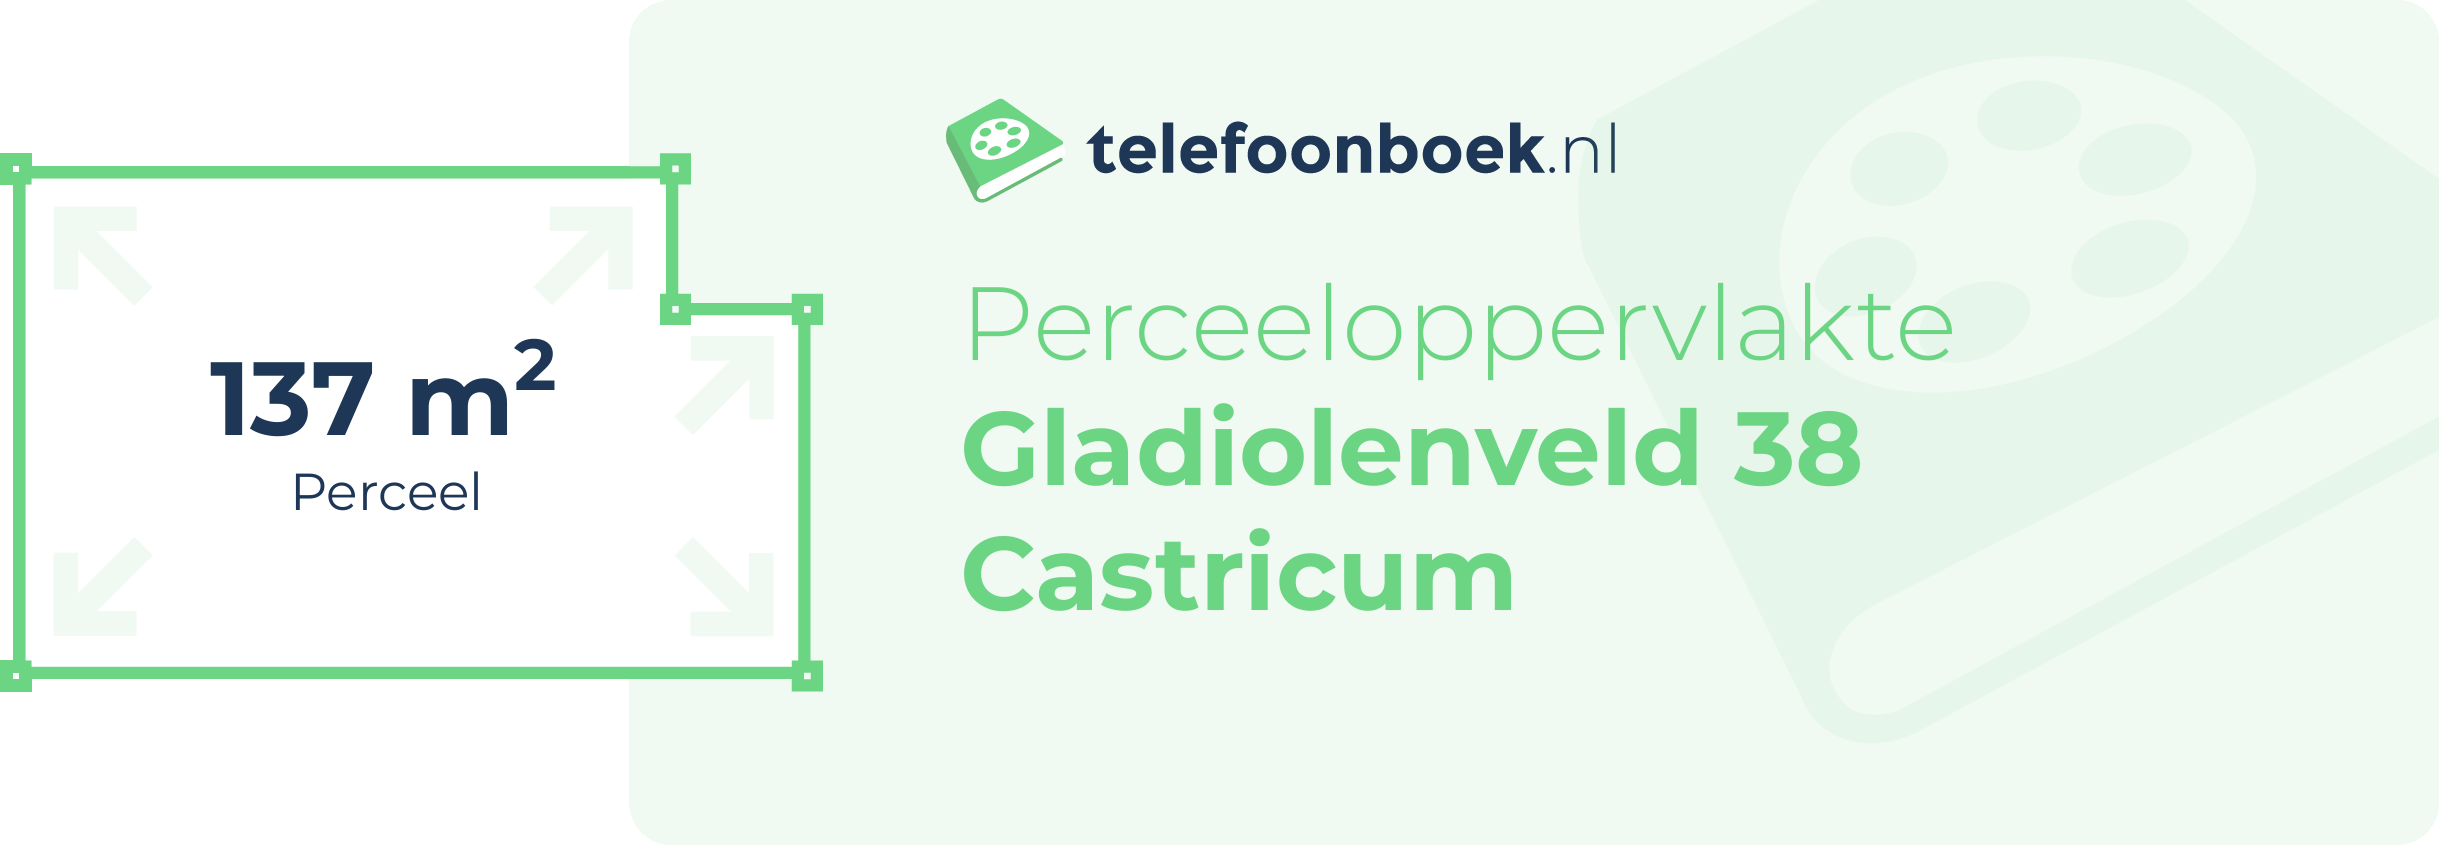 Perceeloppervlakte Gladiolenveld 38 Castricum